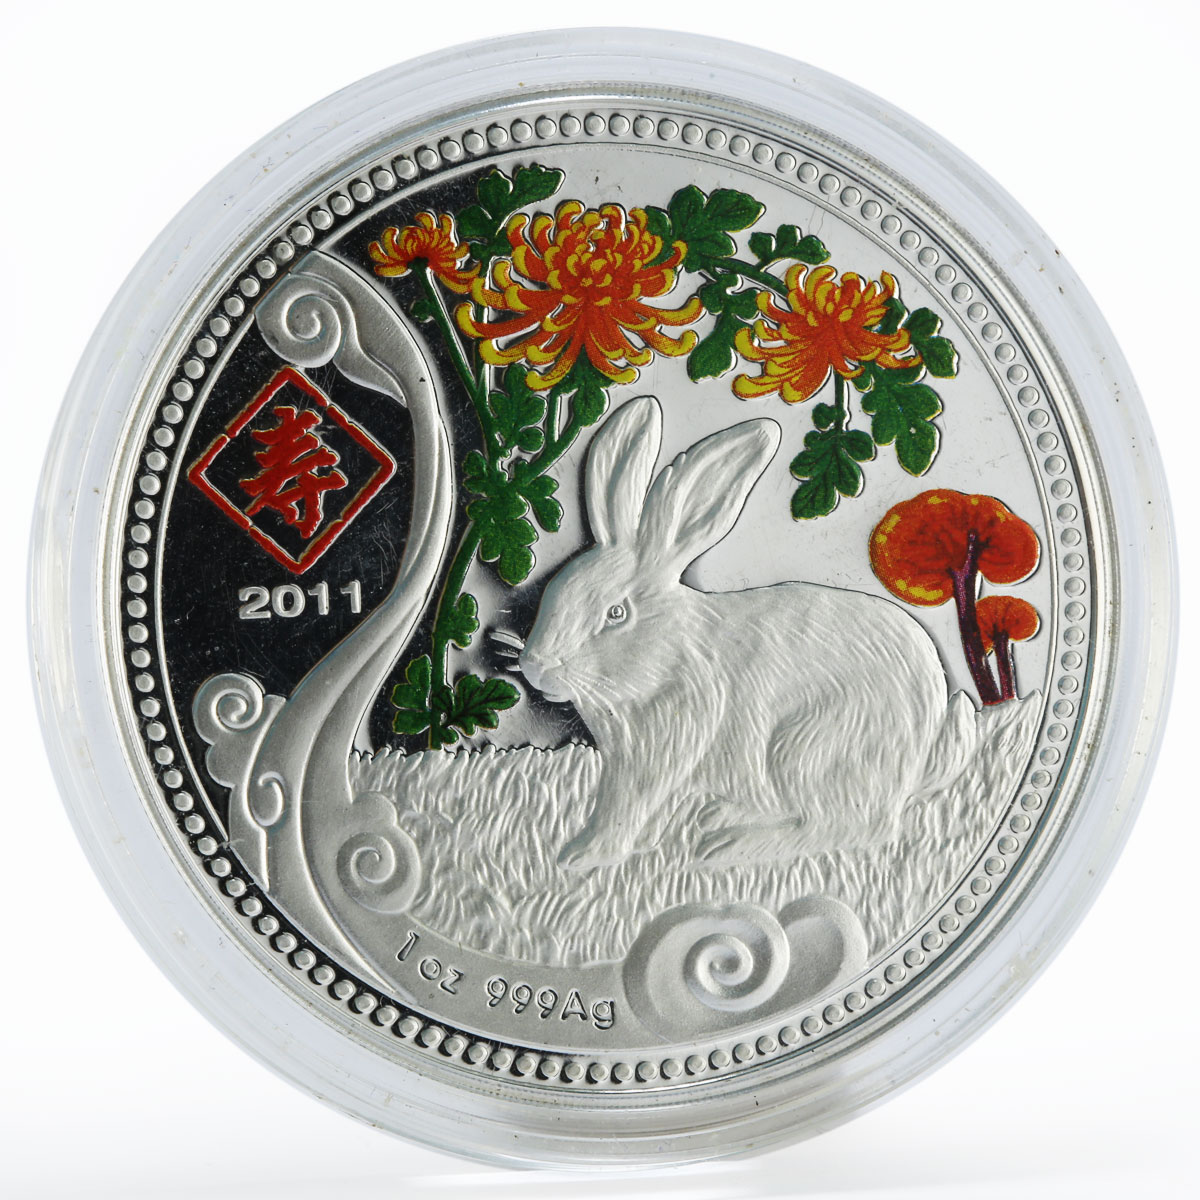 Malawi 20 kwacha Year of the Rabbit Lunar Calendar colored silver coin 2011